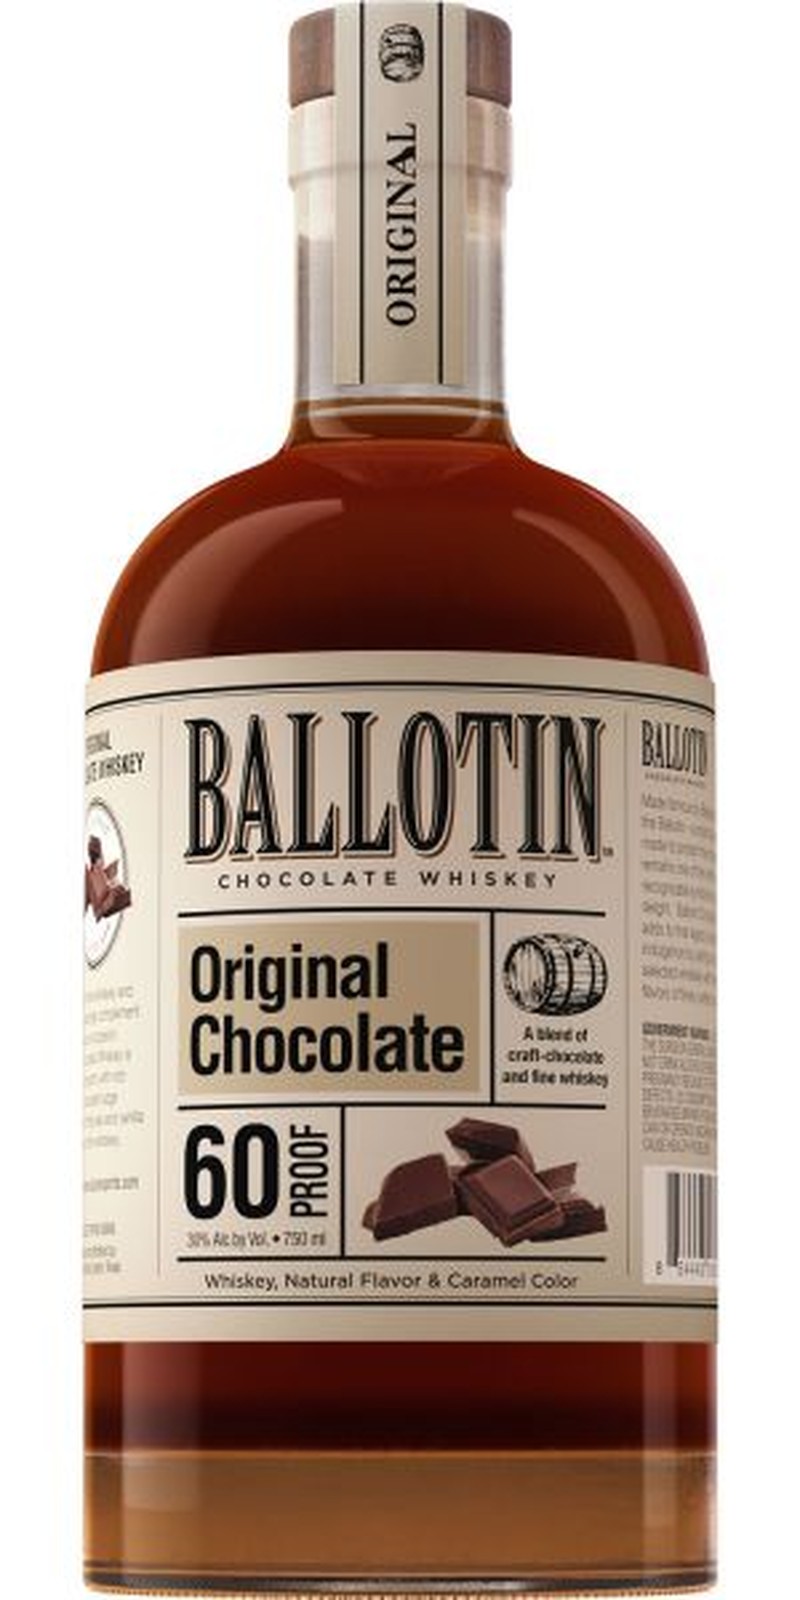 BALLOTIN ORIGINAL CHOCOLATE